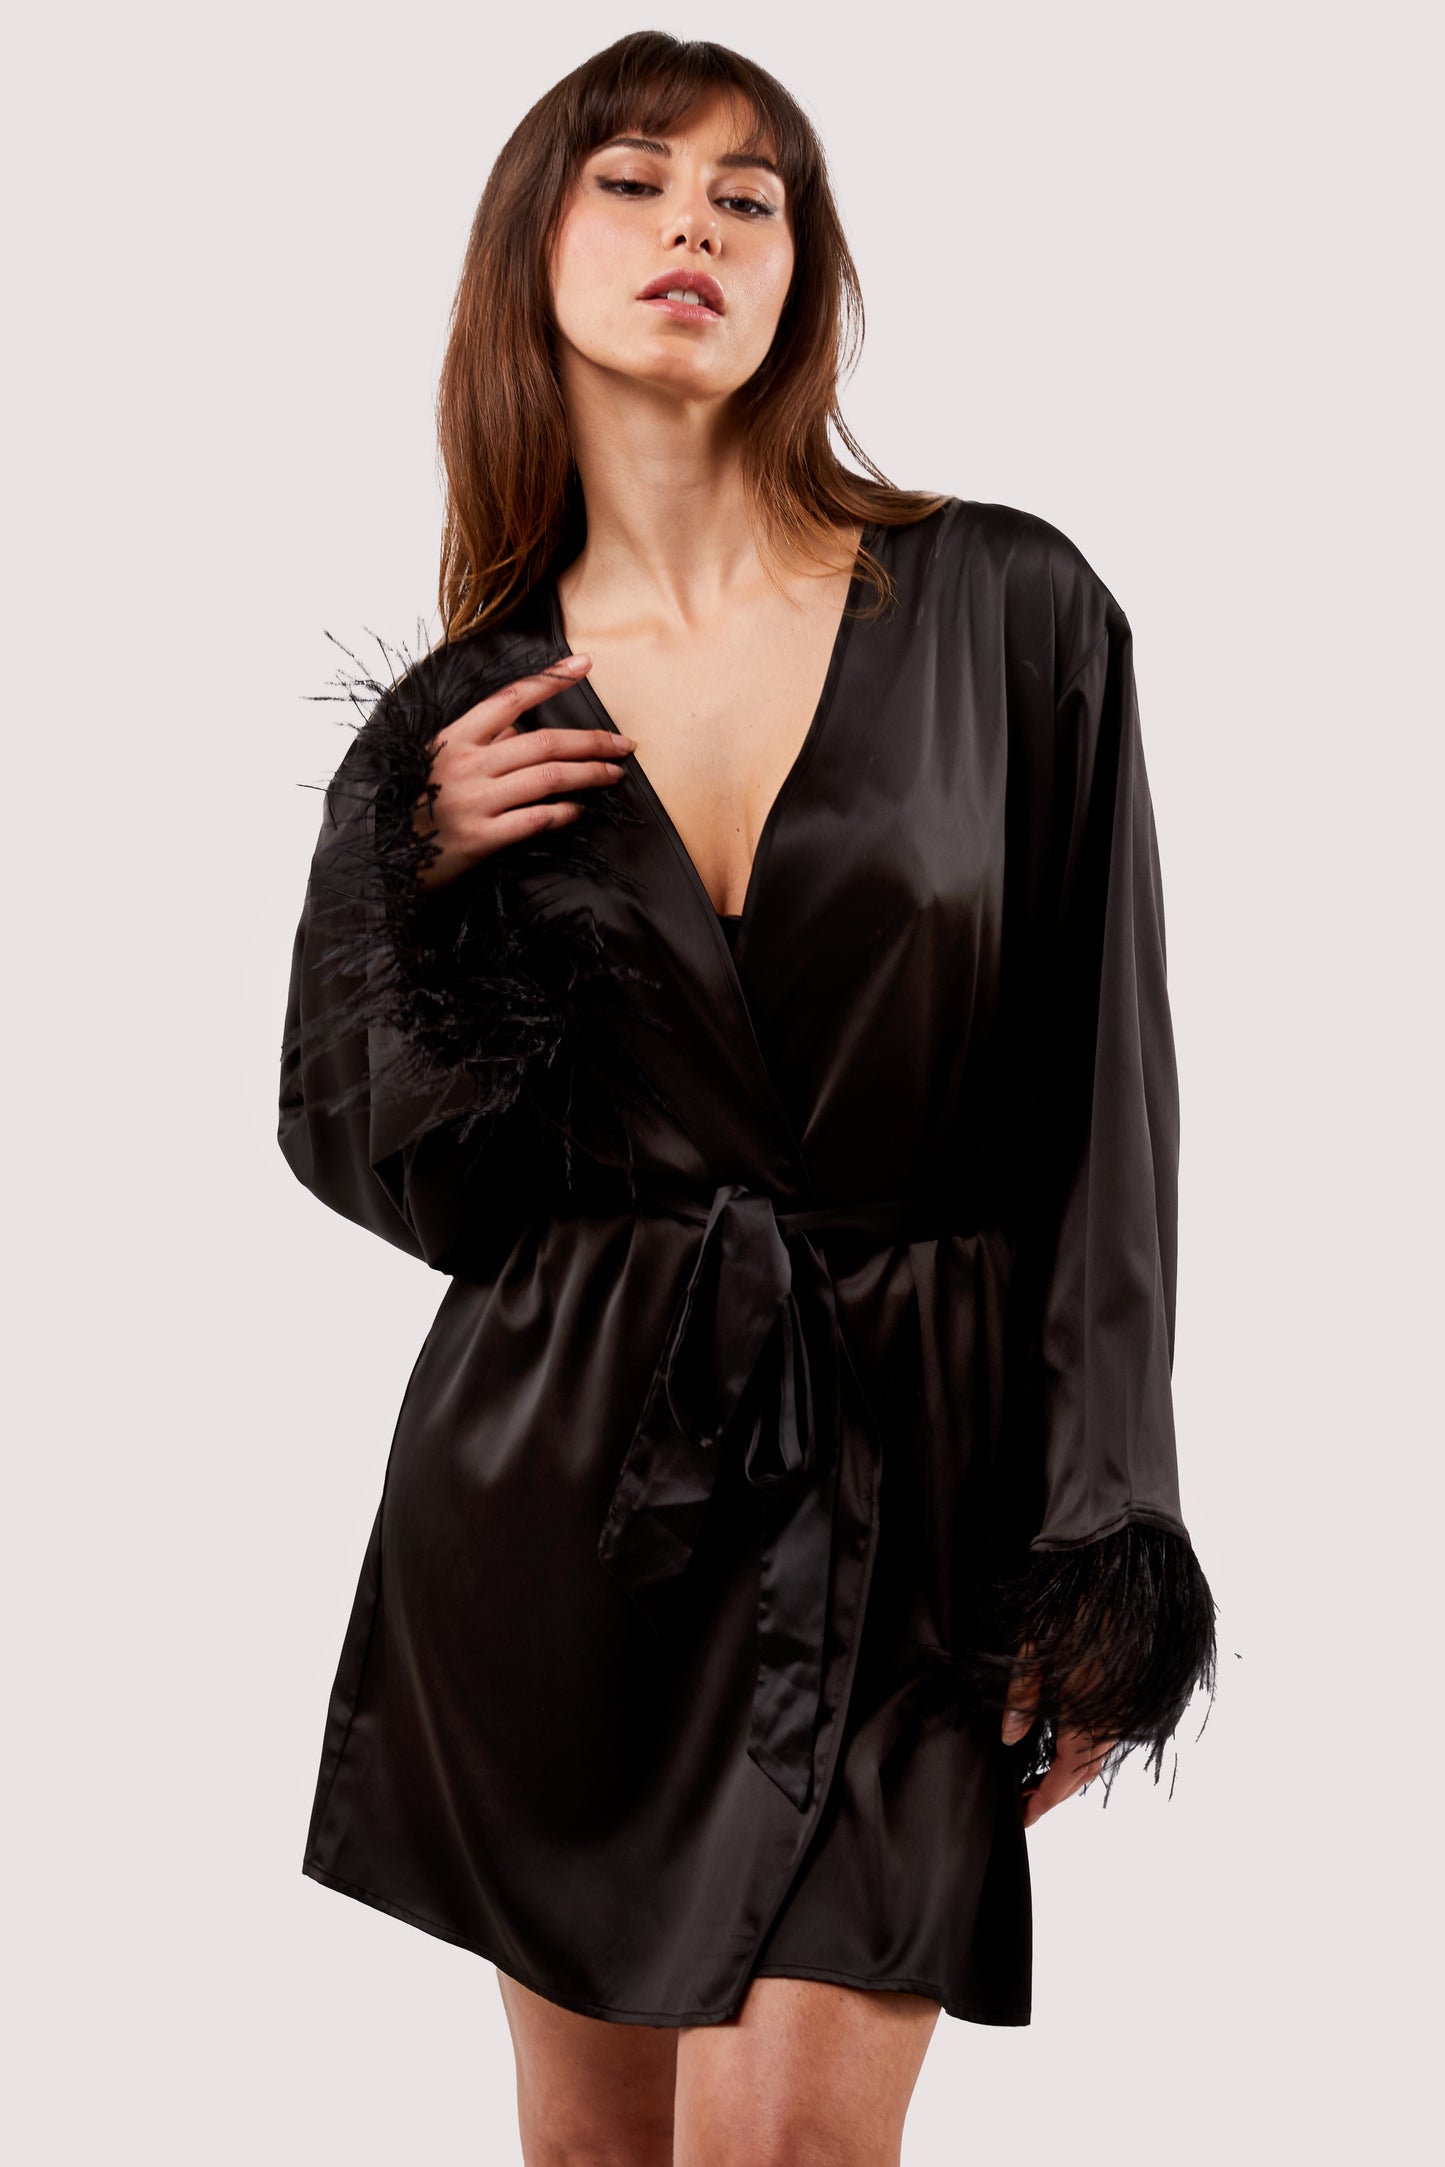 Sirus Black Satin Robe - sizes 6, 8 , 18 + 22